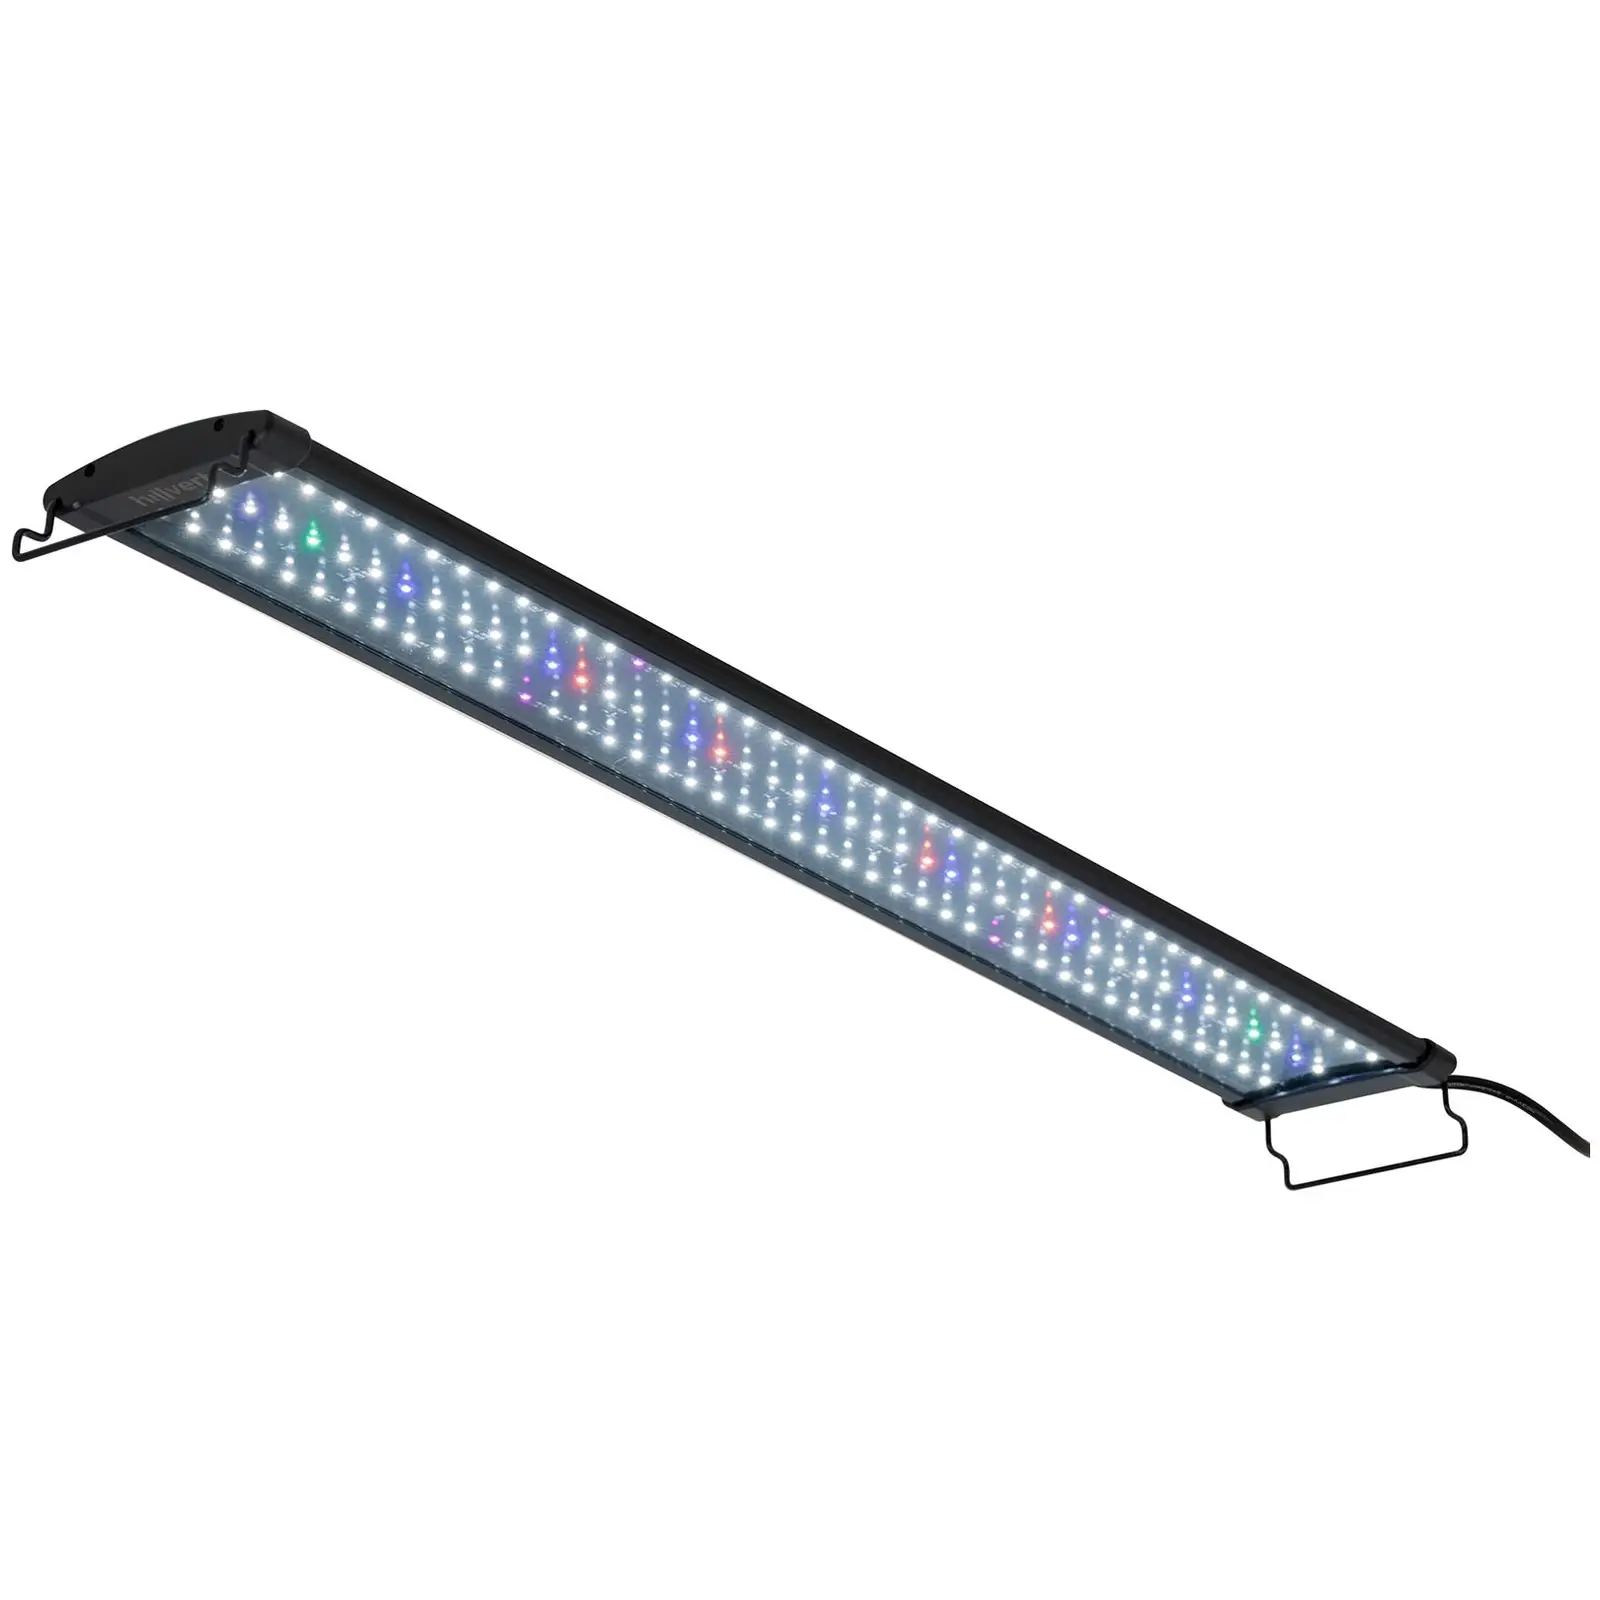 LED-akvaariovalo - 129 LED-valoa - 25 W - 87 cm